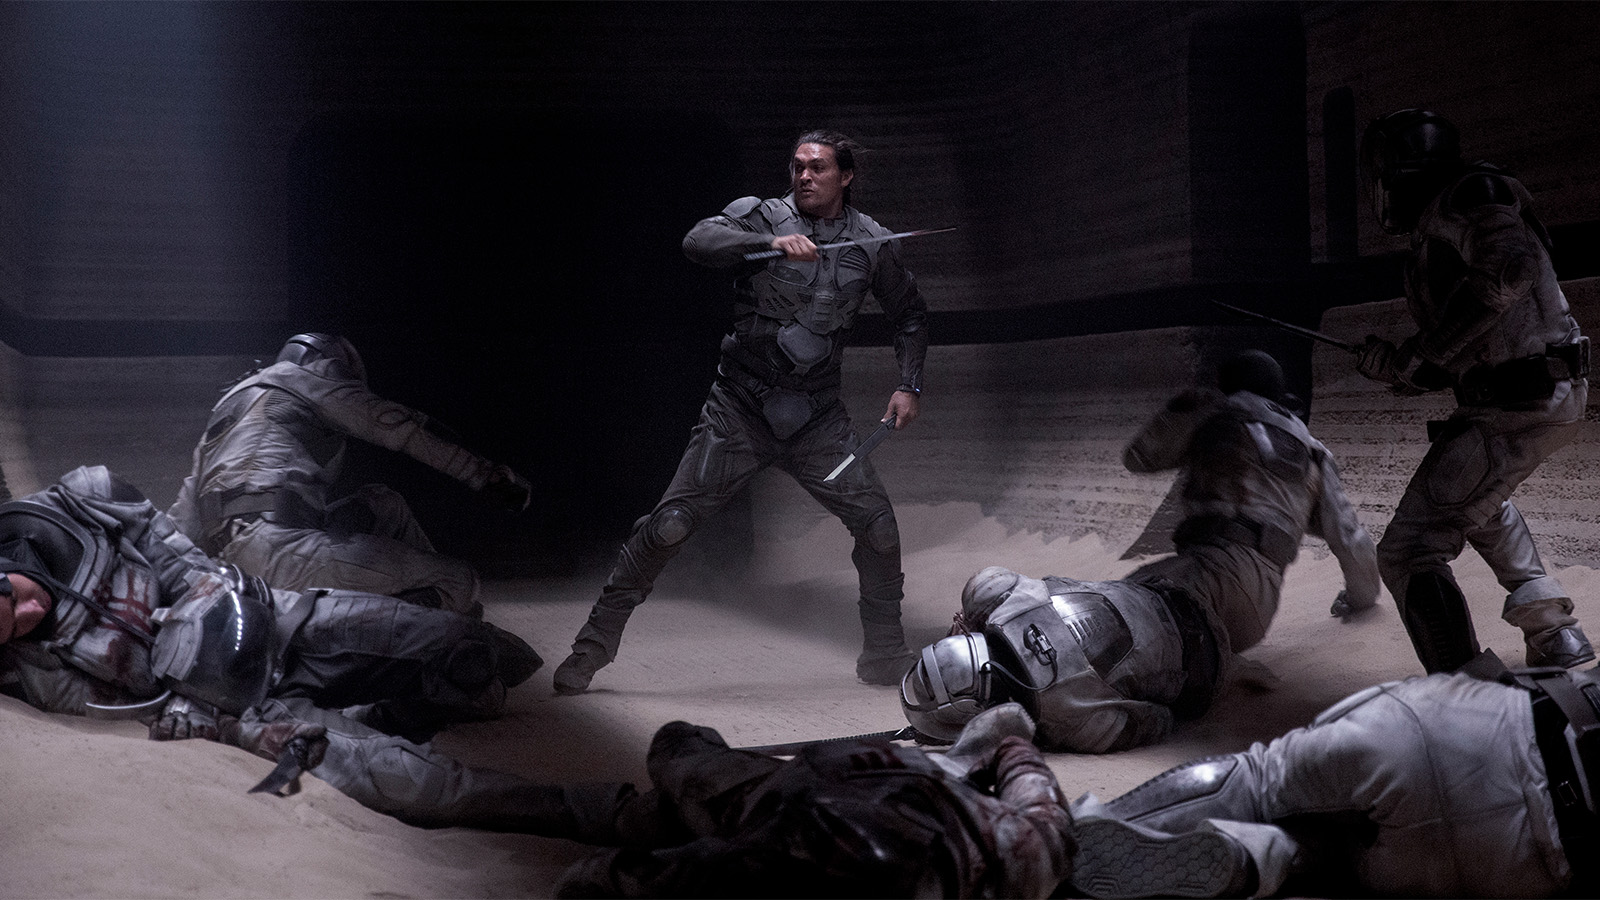 Duncan Idaho (Jason Momoa) fights a wave of Sardaukar in Dune. Image © Warner Bros.